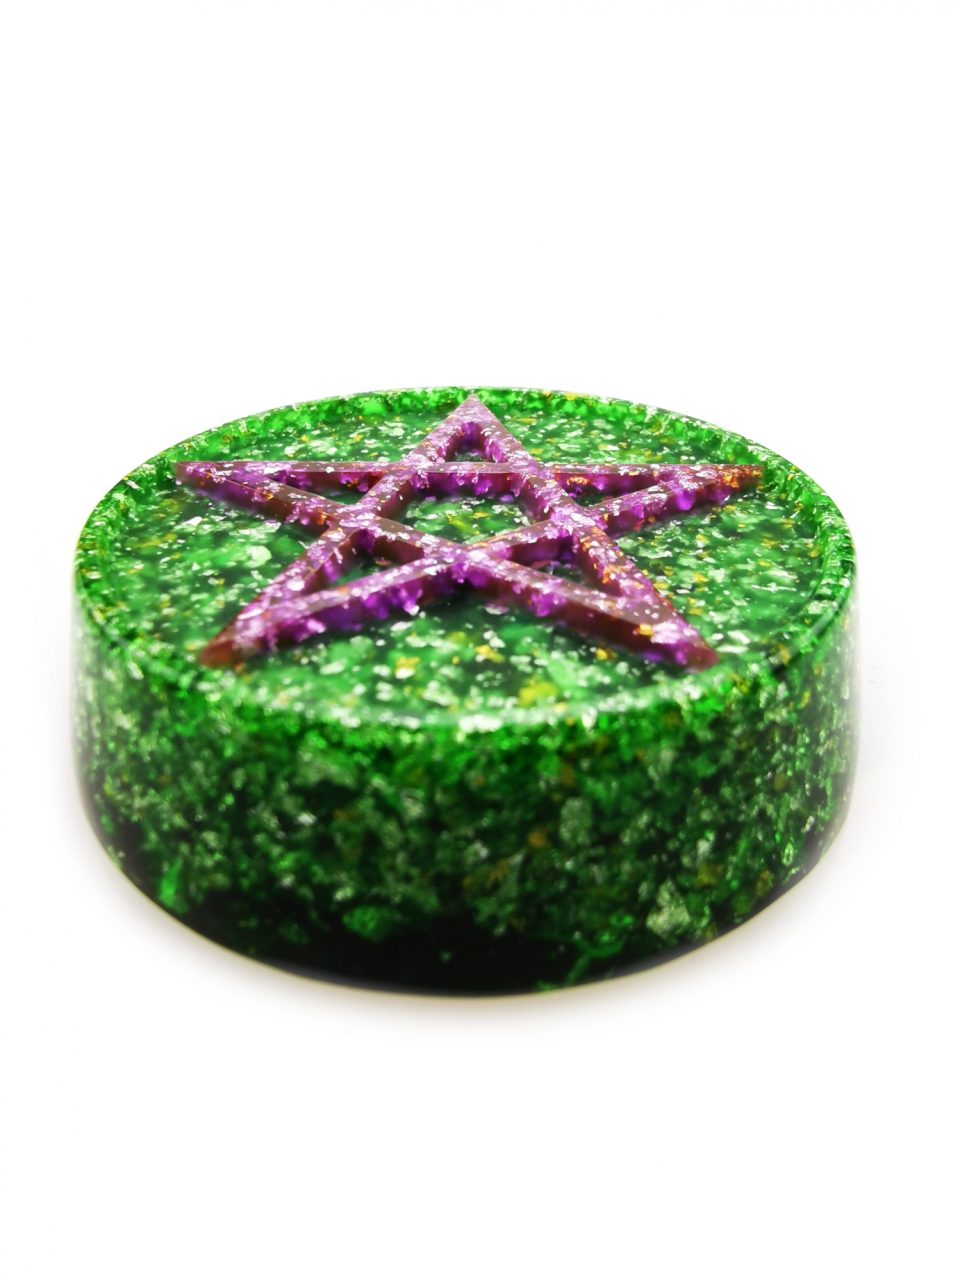 Pentagram Protection Orgone Puck in Violet Green by OrgoneVibes